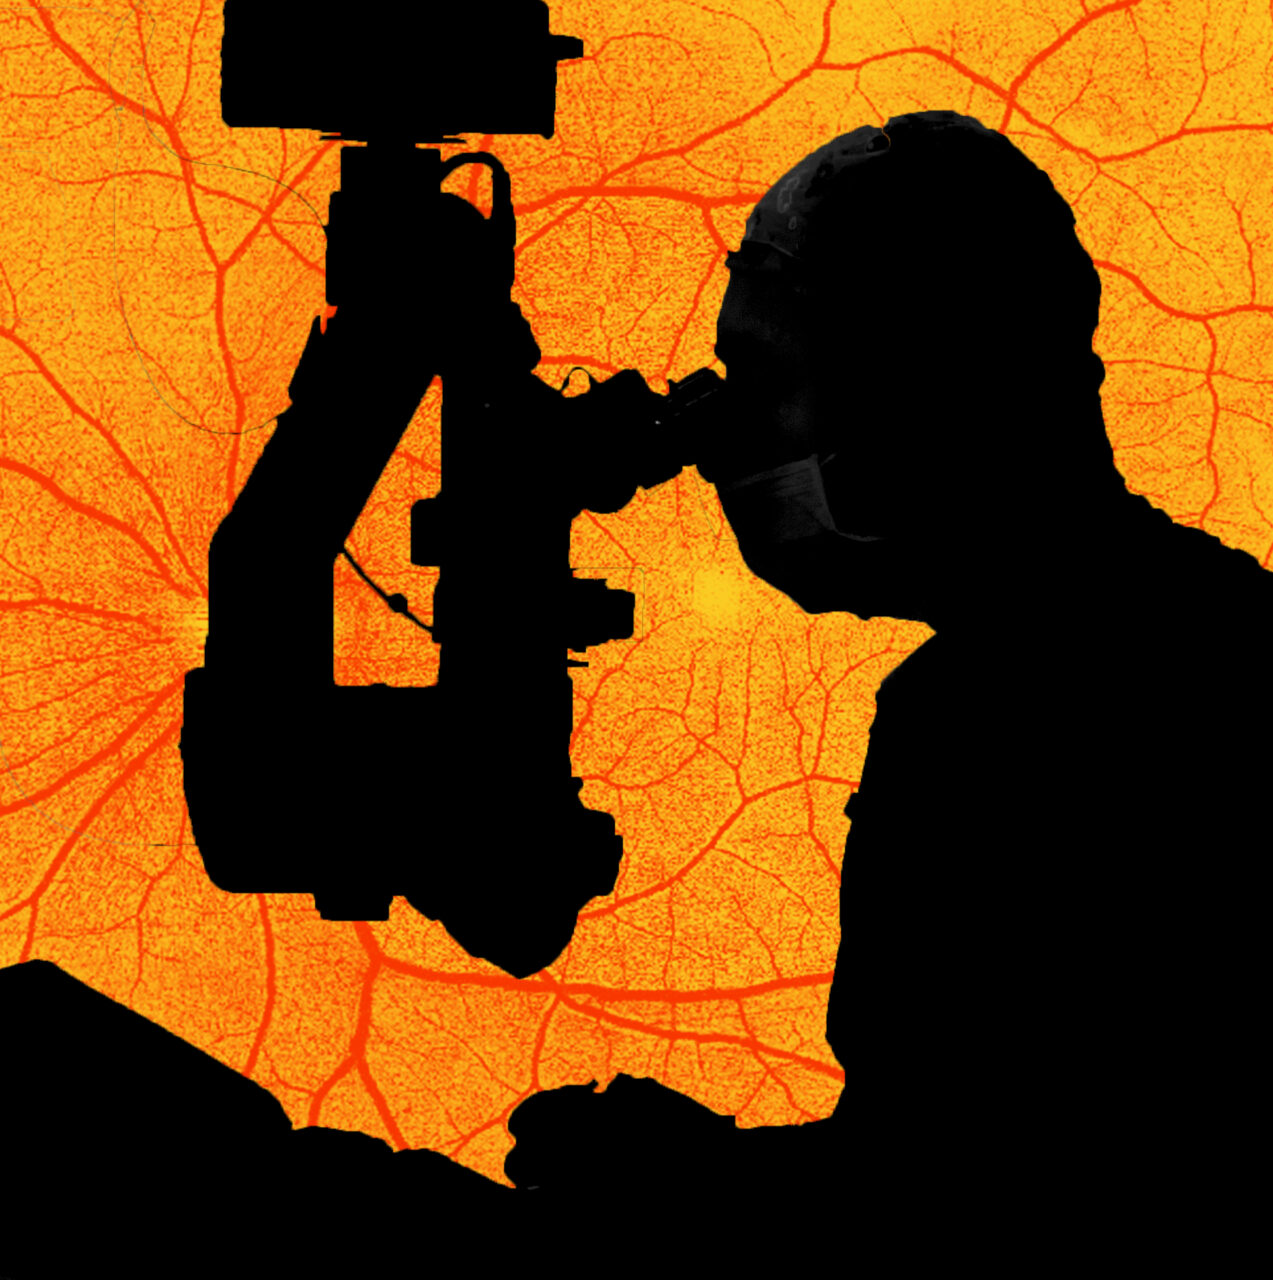 eye-surgeon-performing-retinal-surgery-image-with-retina-image-at-background